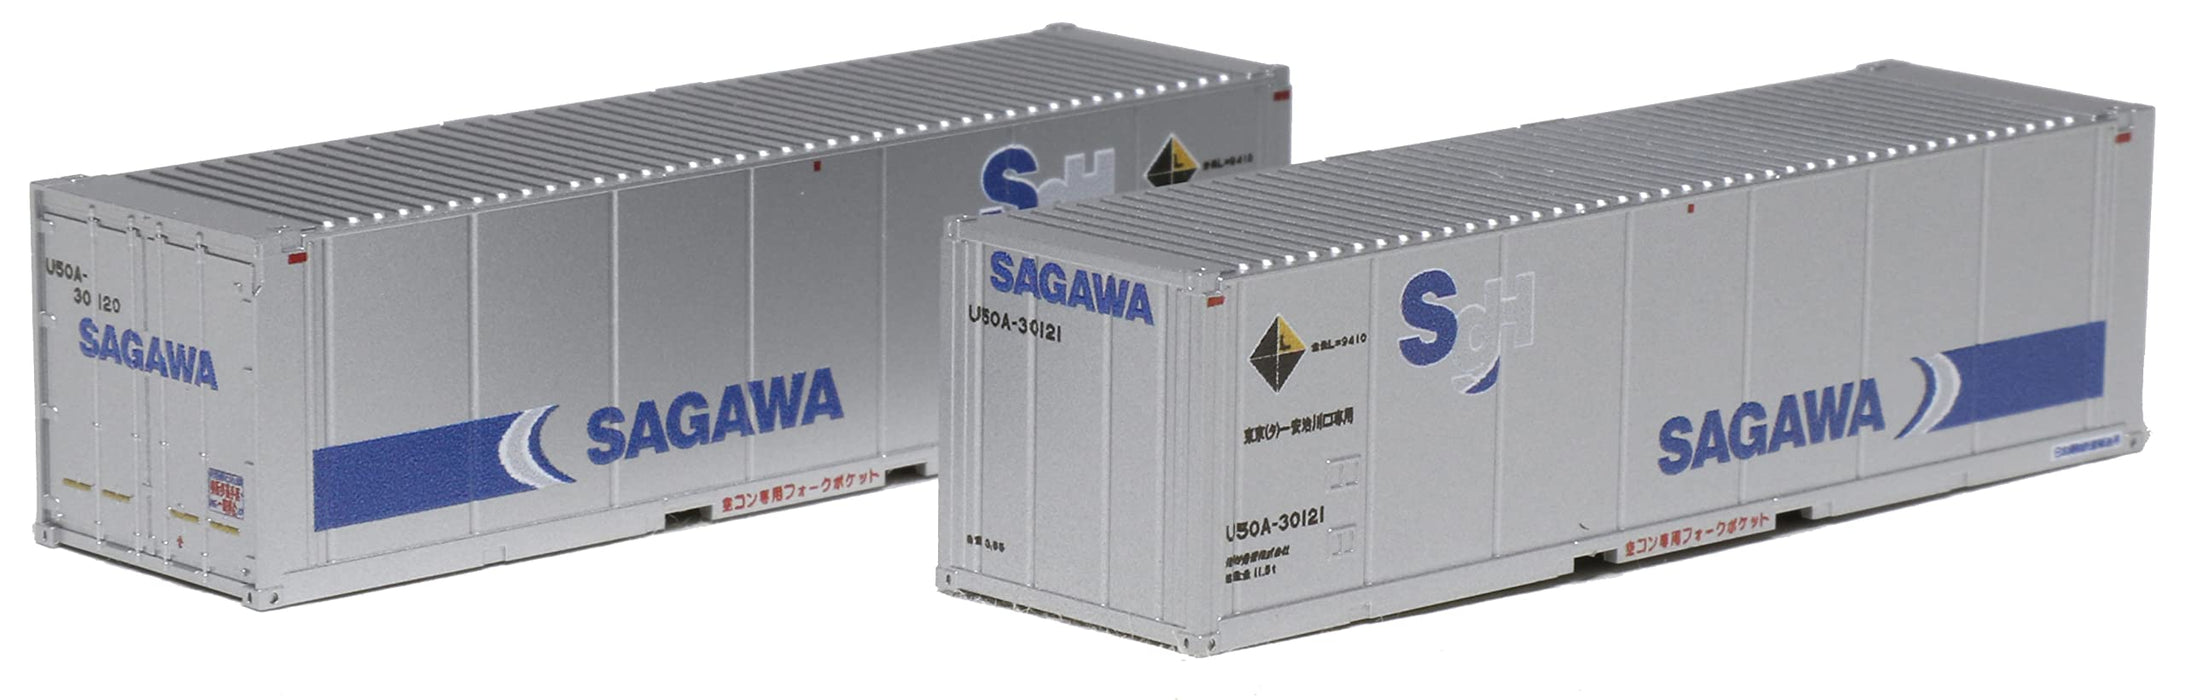 Kato U50A Sagawa Express Container 2-Pack N Gauge 23-579 Railway Model